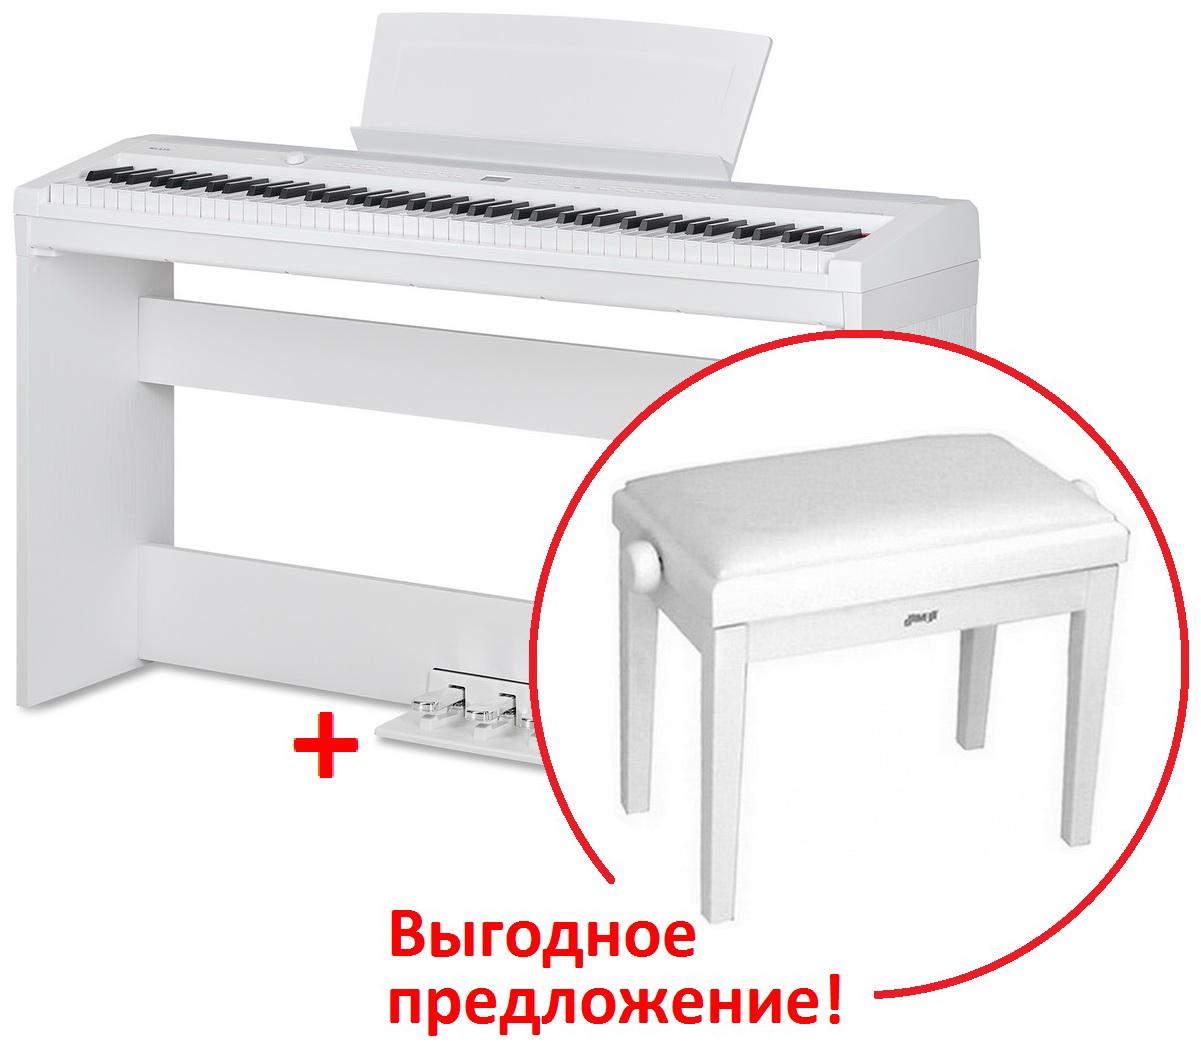 Цифровое пианино Becker BSP-102W